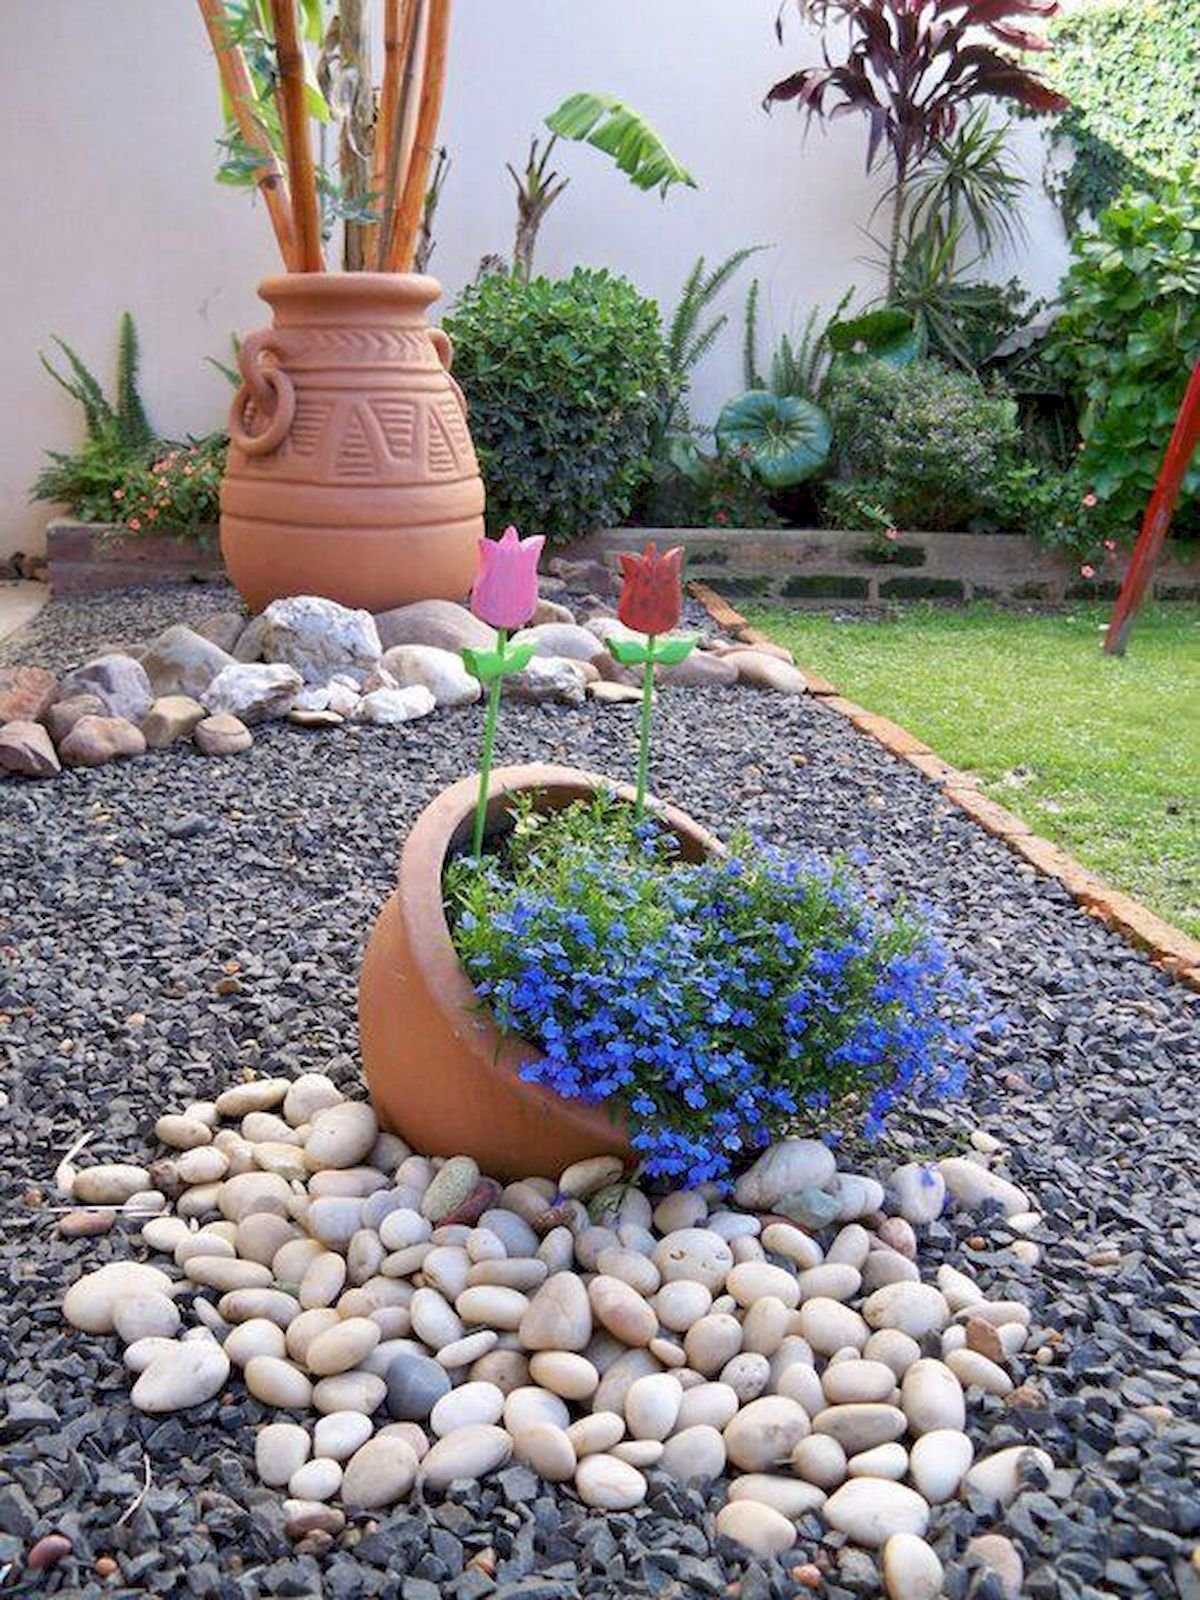 Декоративная щебенка для сада. Клумба из камней. Декор клумбы камнями. Композиция из камней в саду. Декоративная галька для сада.